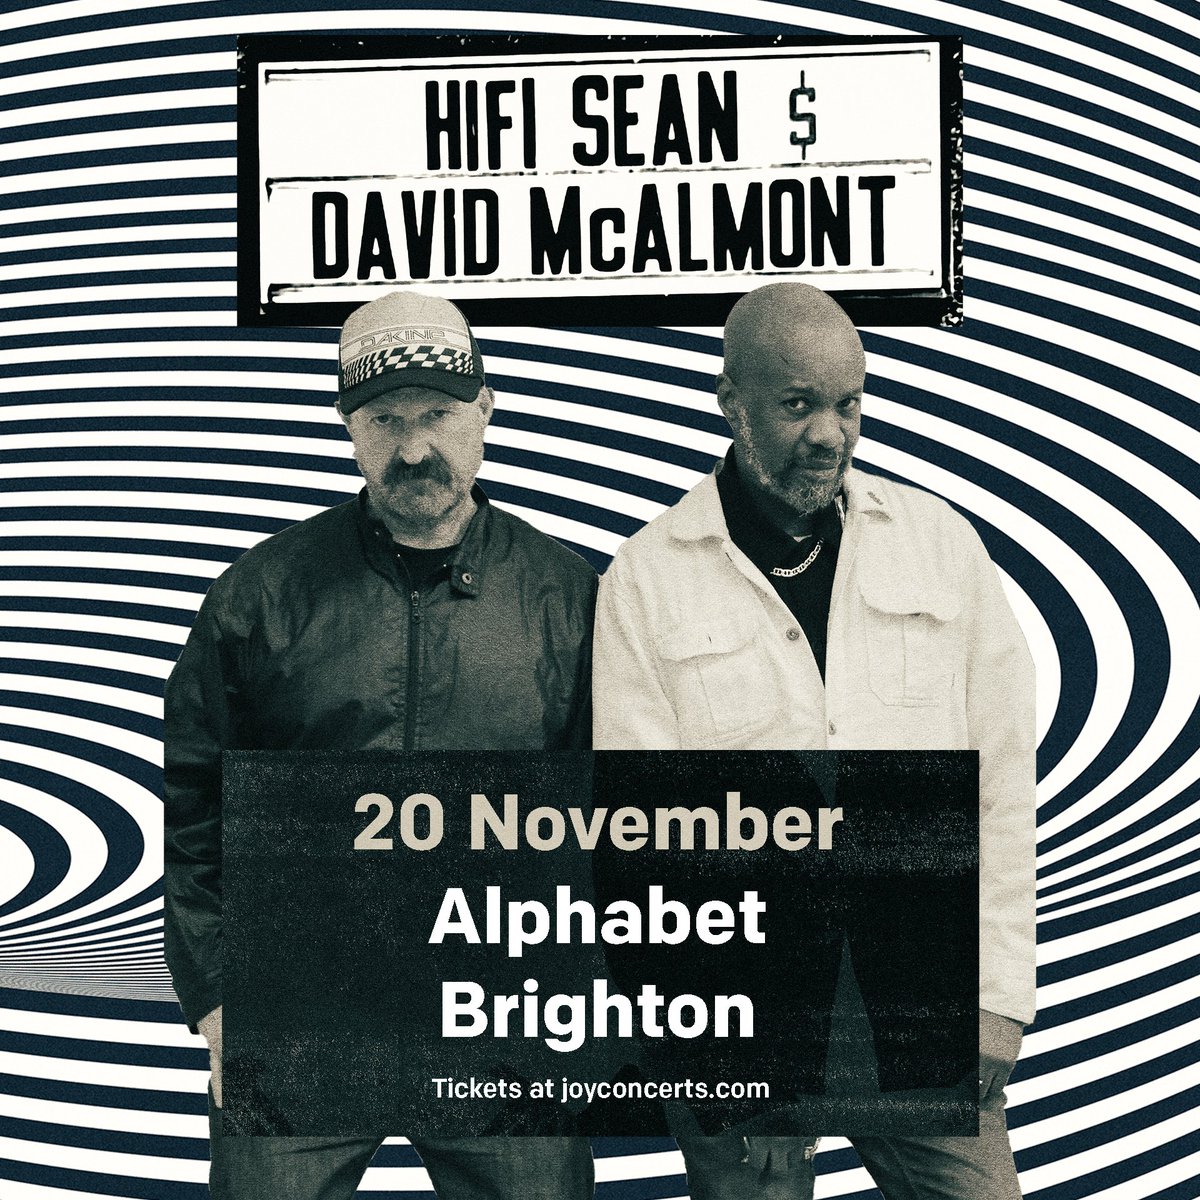 NEW SHOW 🔊 HIFI SEAN & DAVID MCALMONT - this November at Alphabet, Brighton! 🎟 Tickets on sale Fri 10th May at 10am